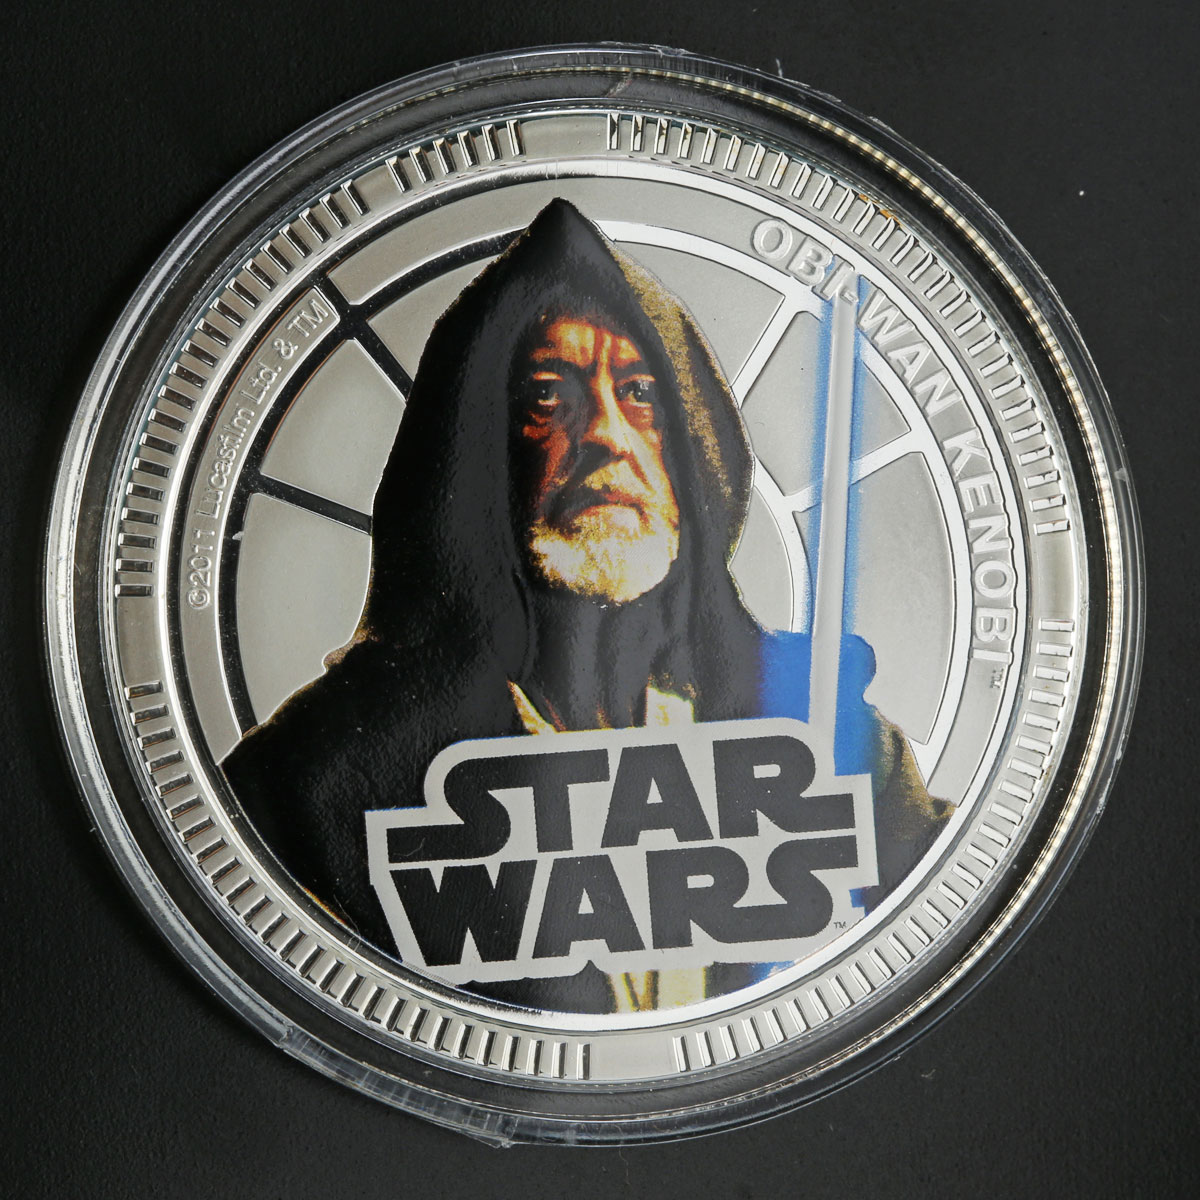 Niue 1 dollar Star Wars series Obiwan Kenobi silverplated coin 2011